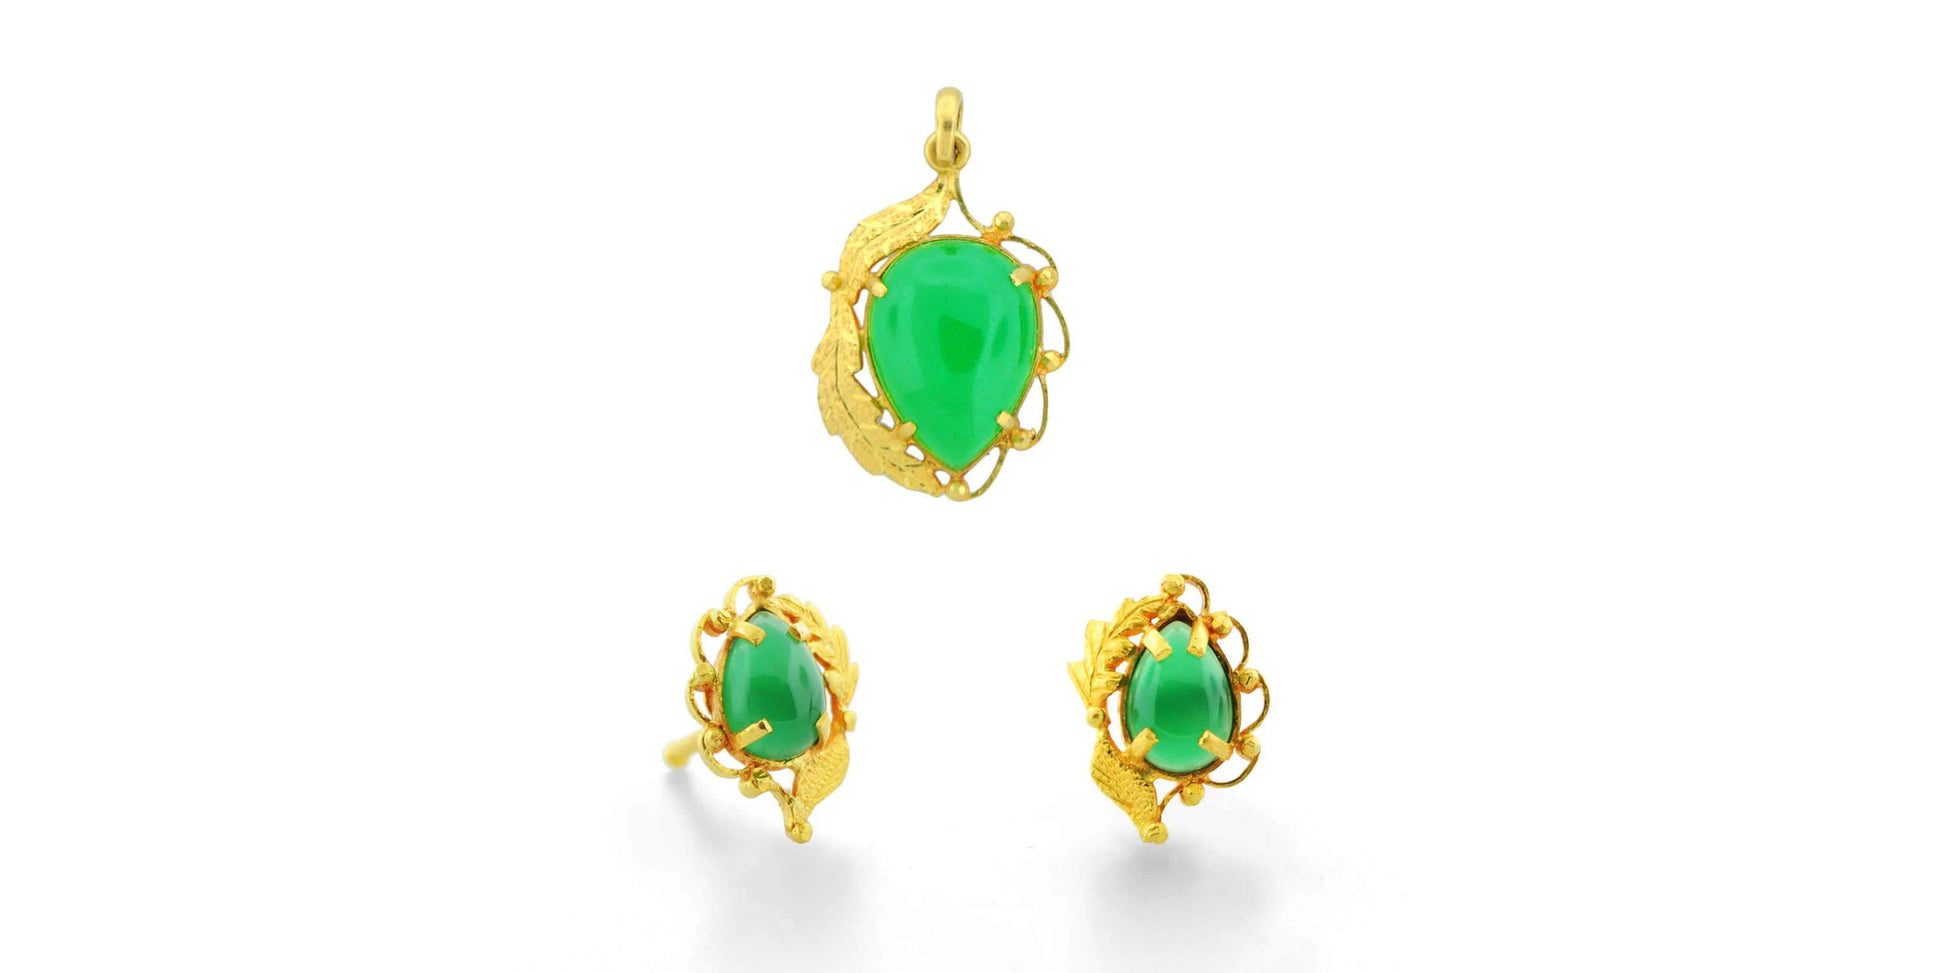 24K/22K Handmade Green Stone Earring and Pendant - Queens Diamond & Jewelry